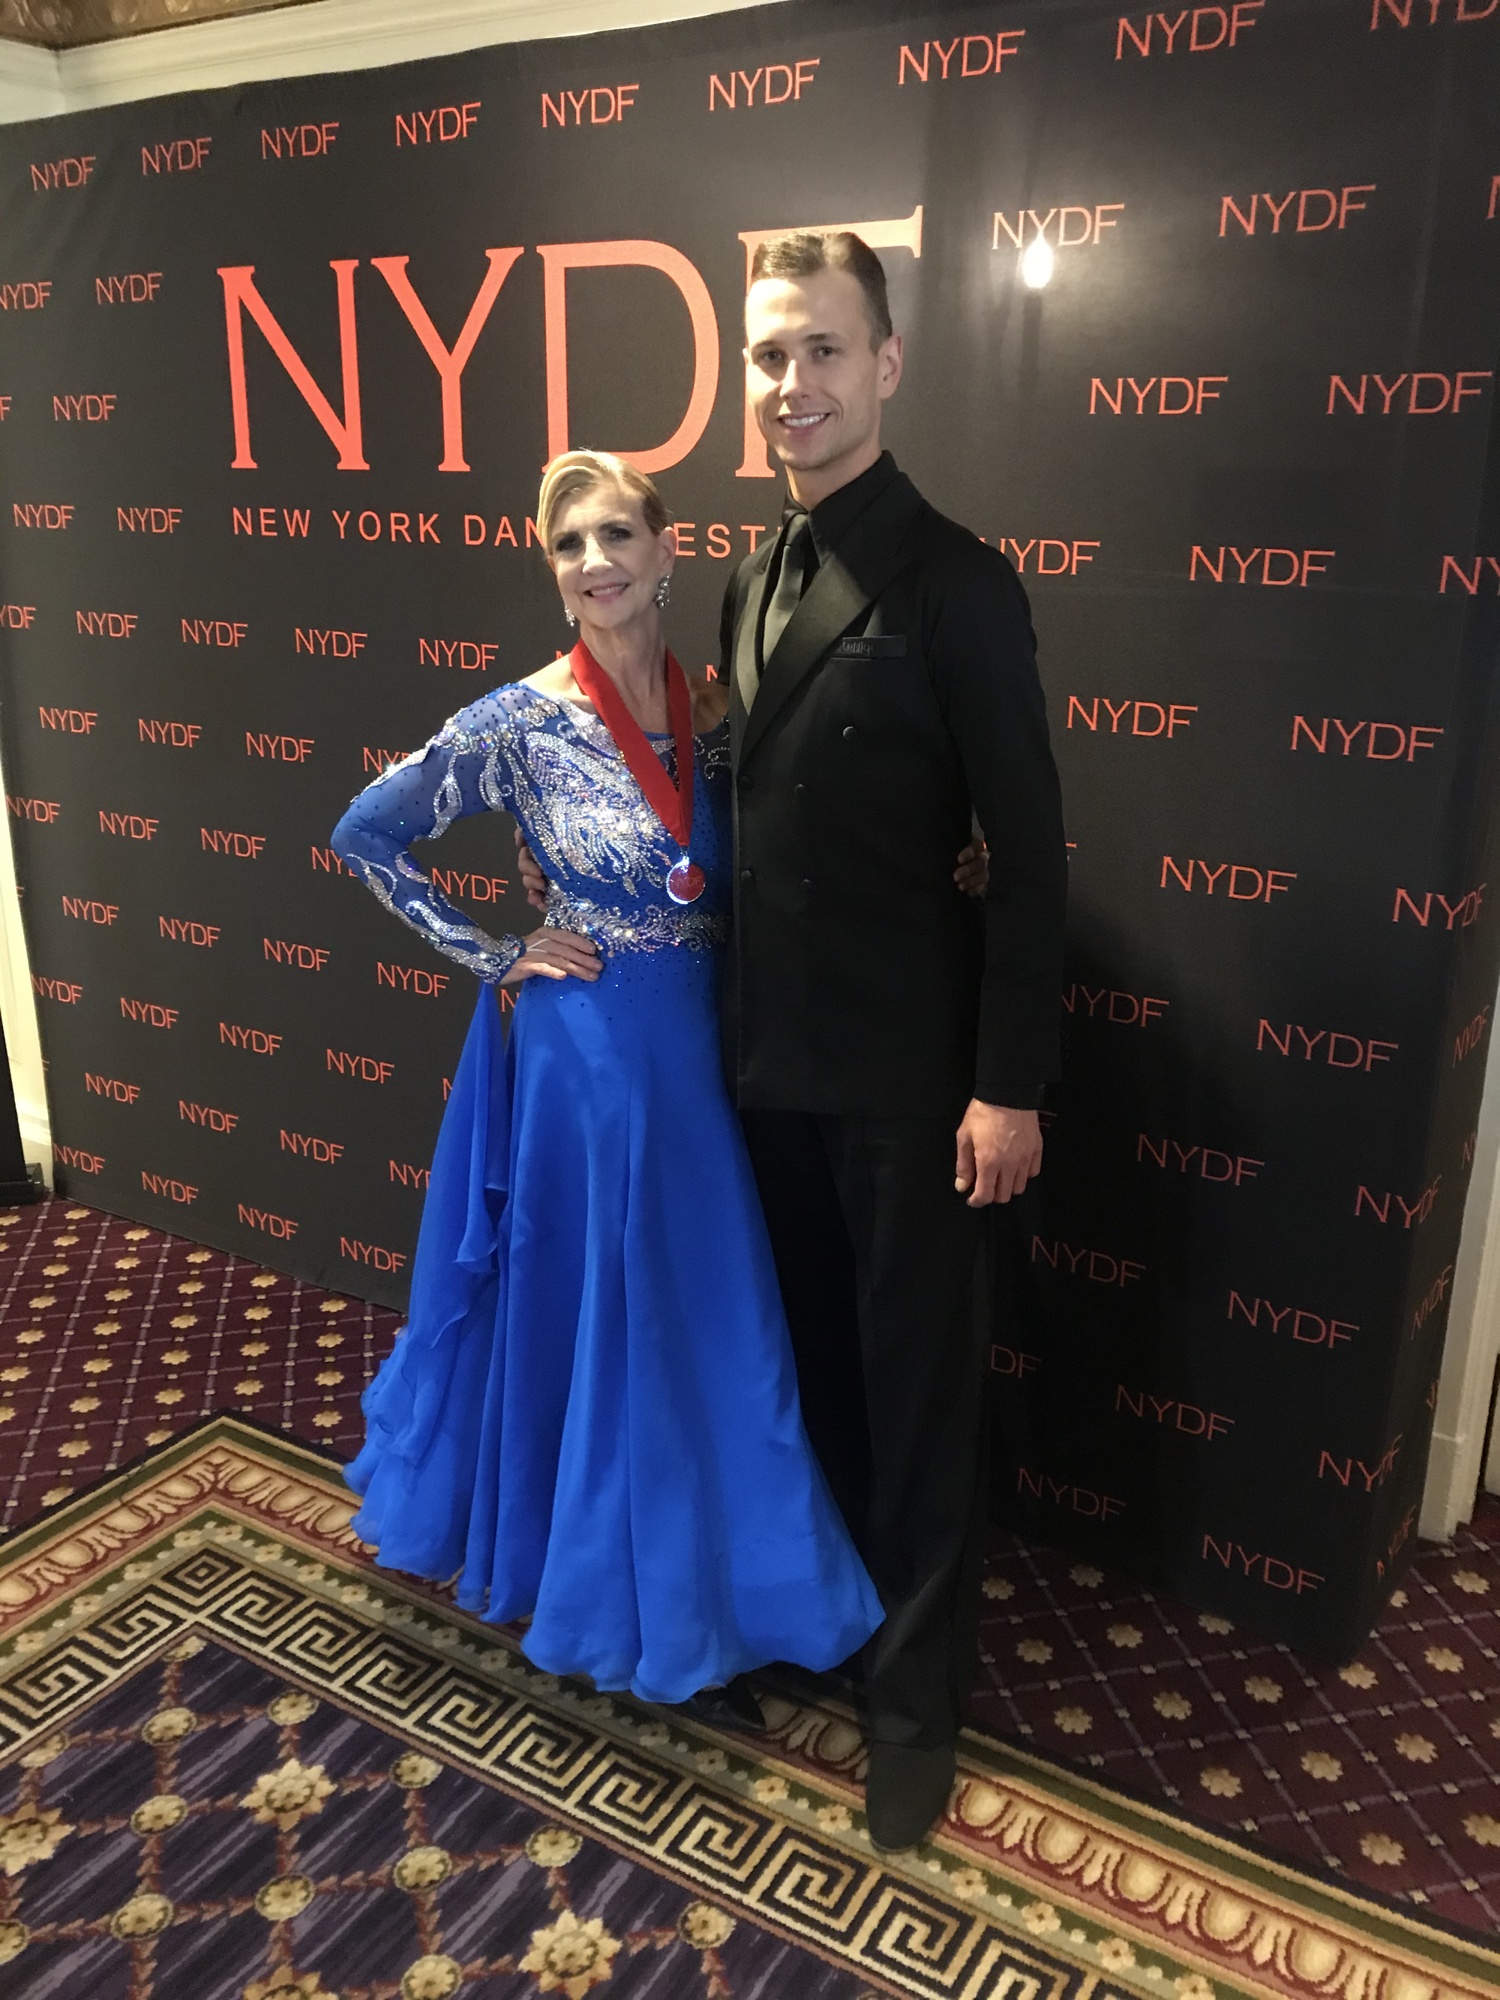 Beth King and Artur Kozun in the 2020 New York Dance Festival. Photo courtesy of Beth King